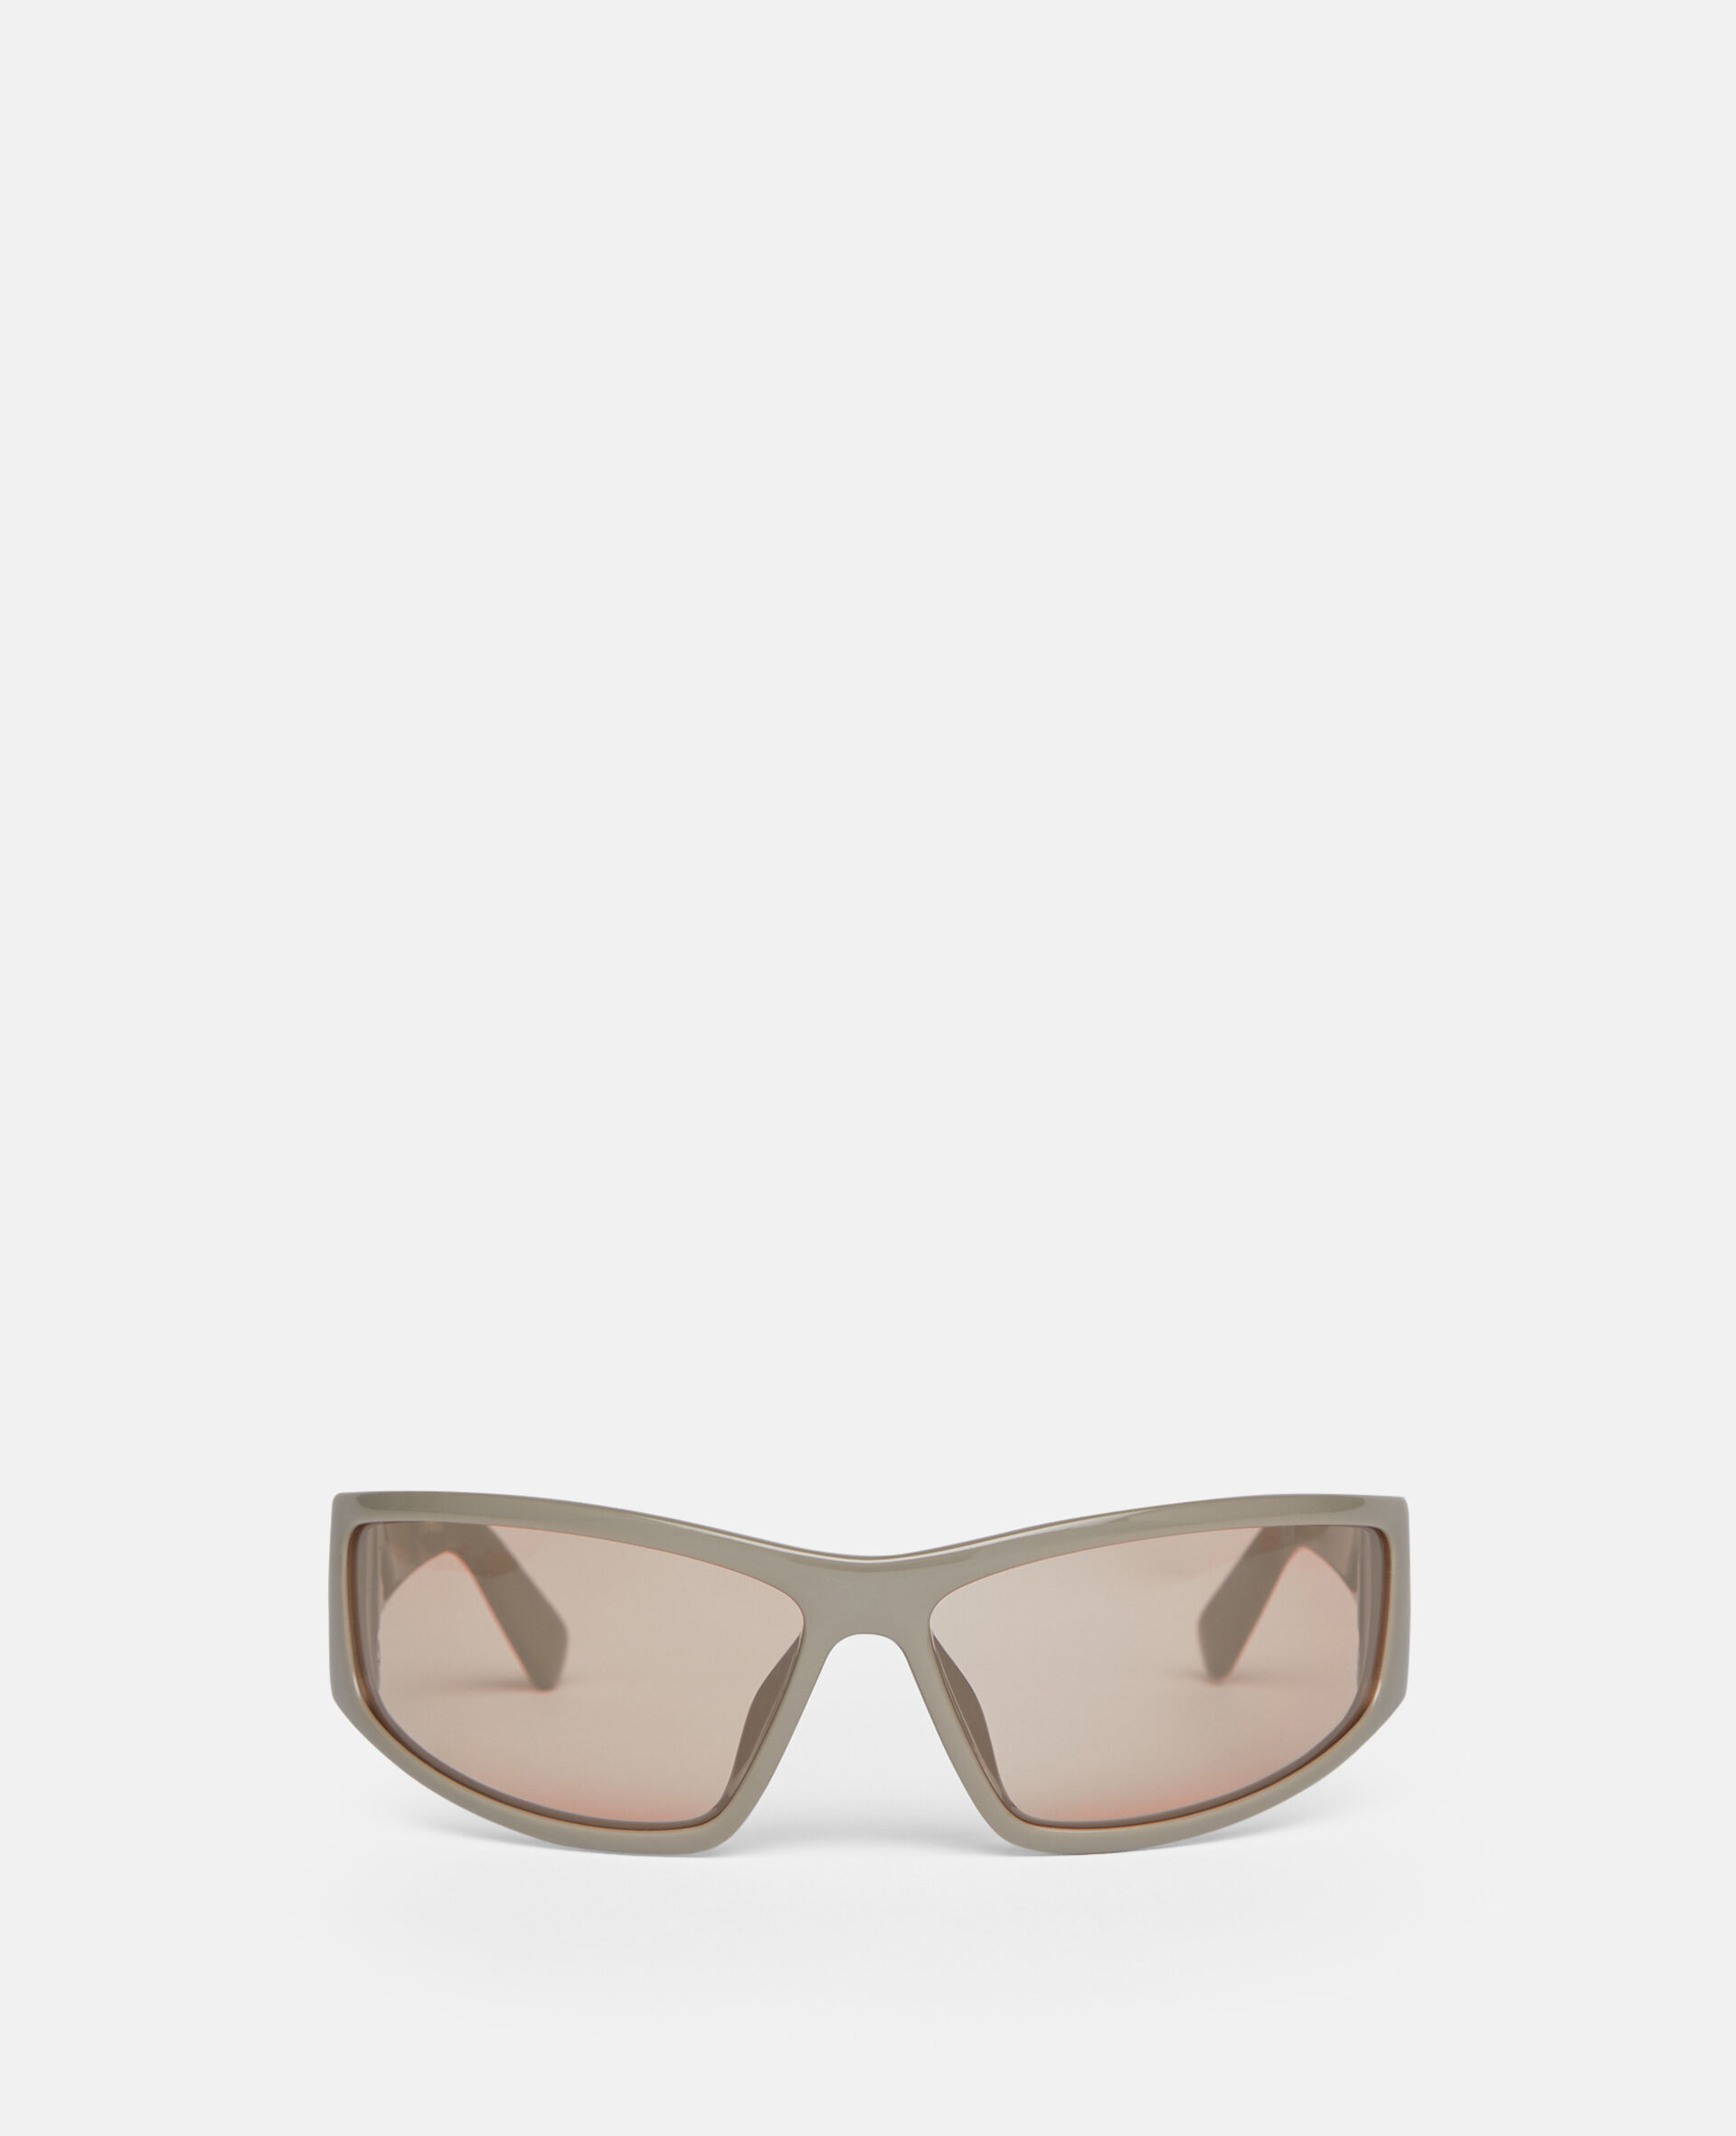 Rectangular Sunglasses-Black-large image number 0